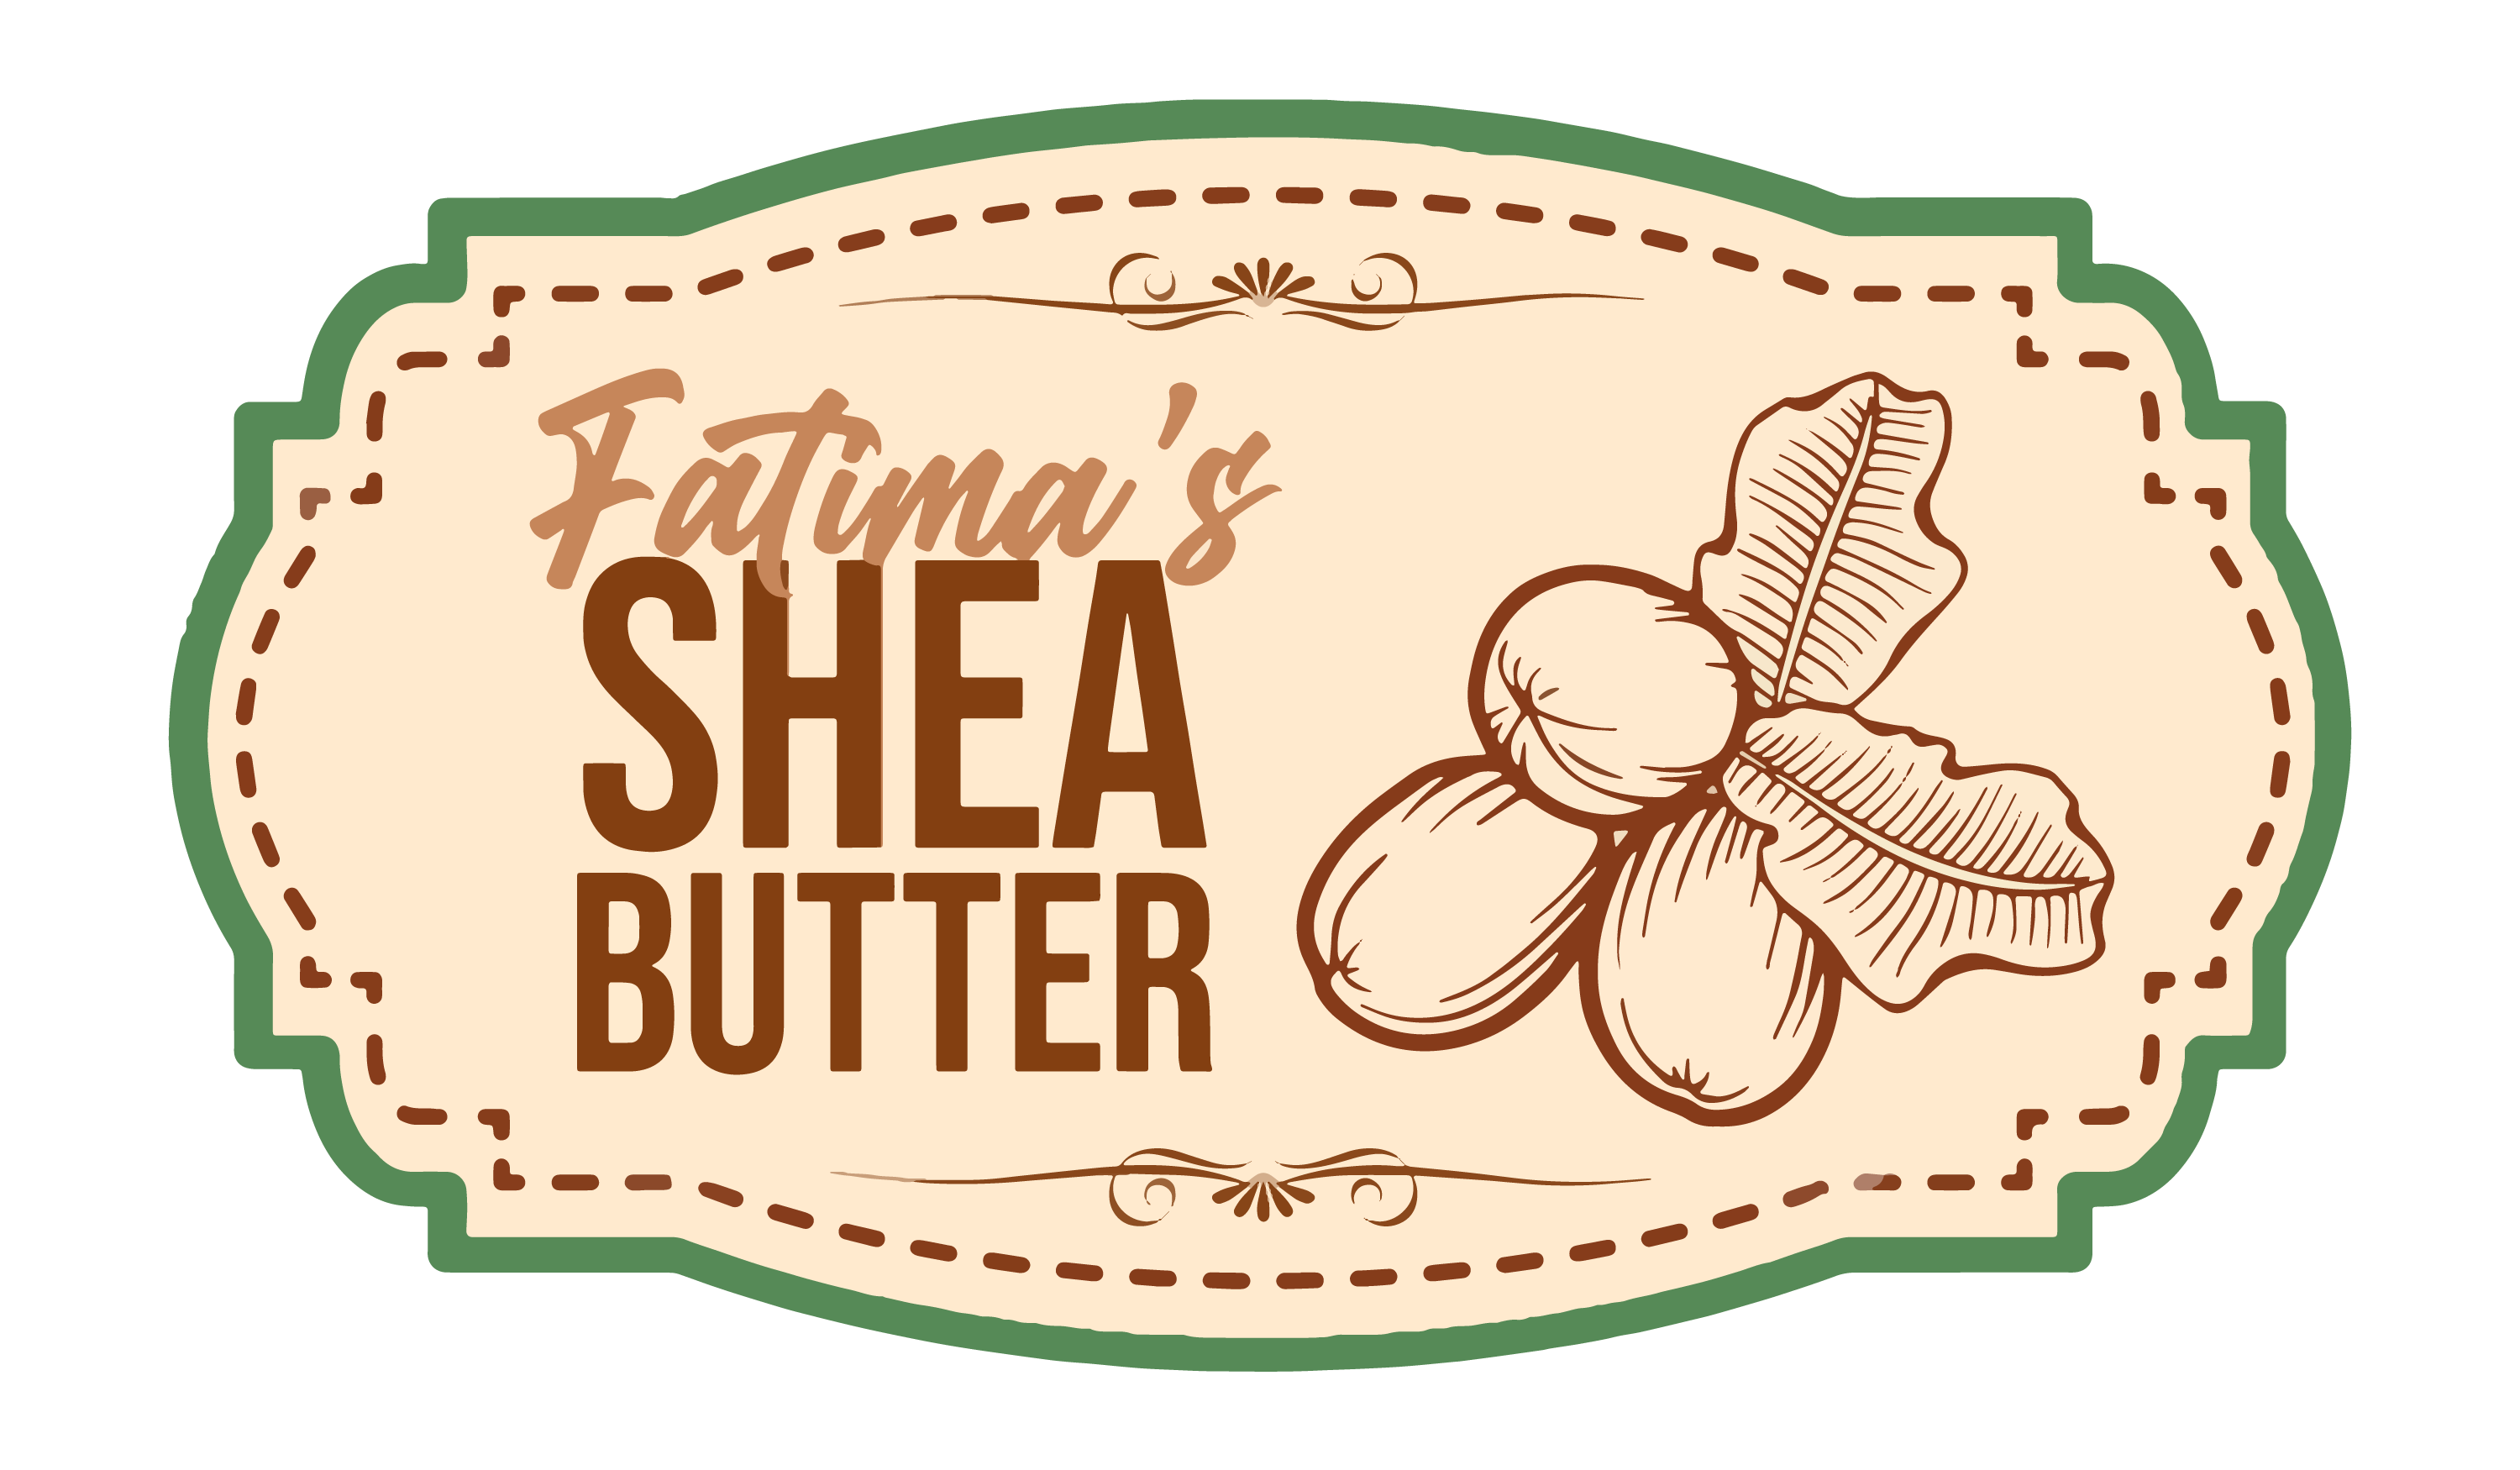 Fatima's Shea Butter